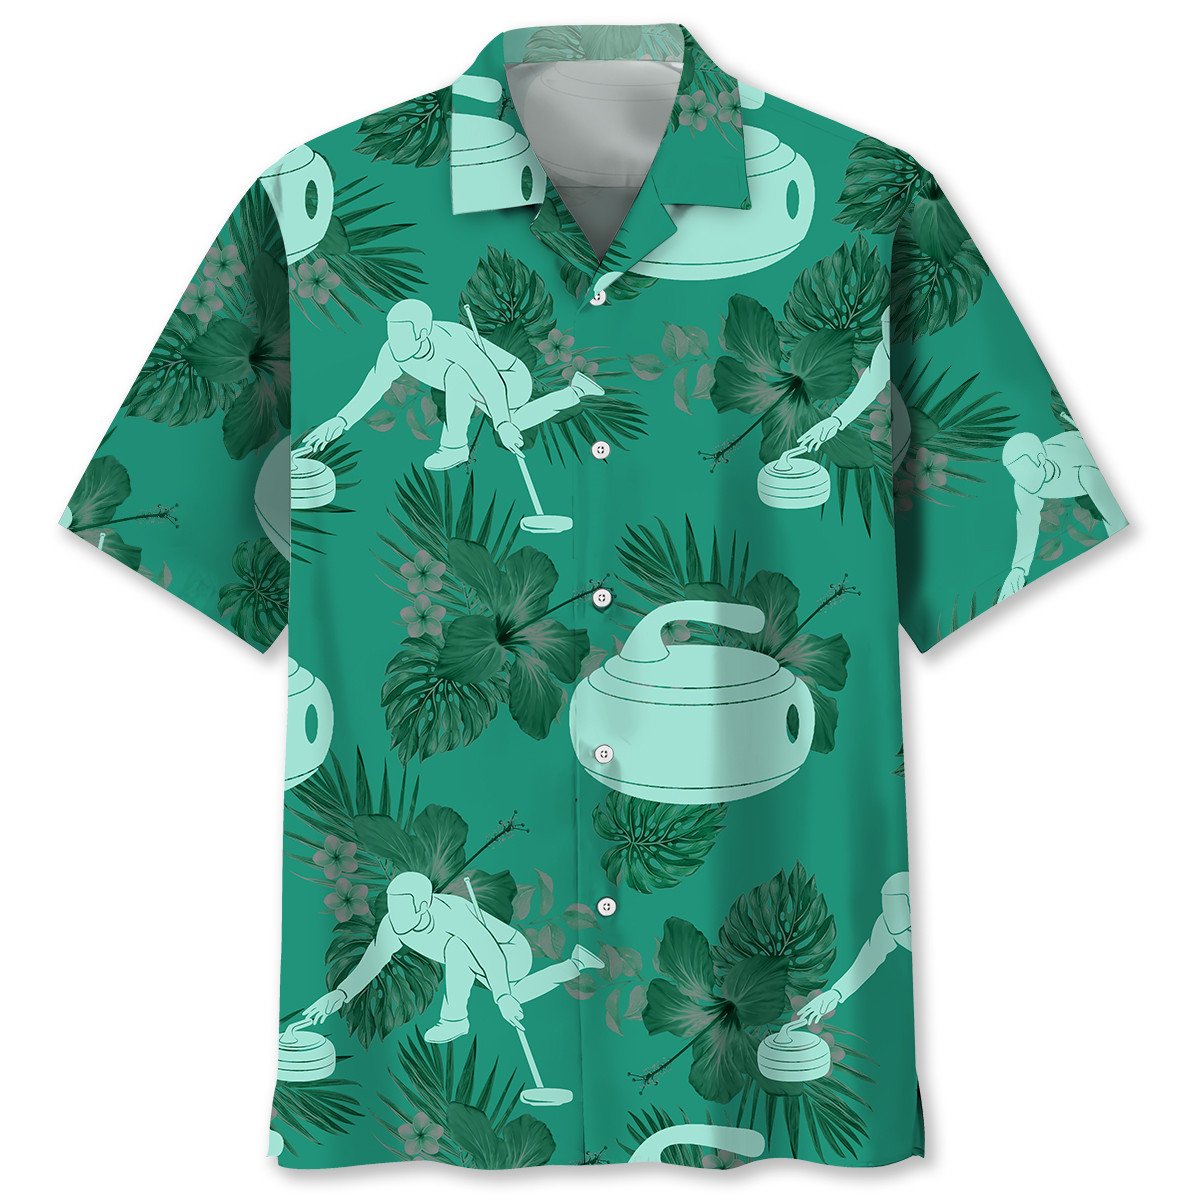 NEW Curling Kelly Green Hawaiian Shirt